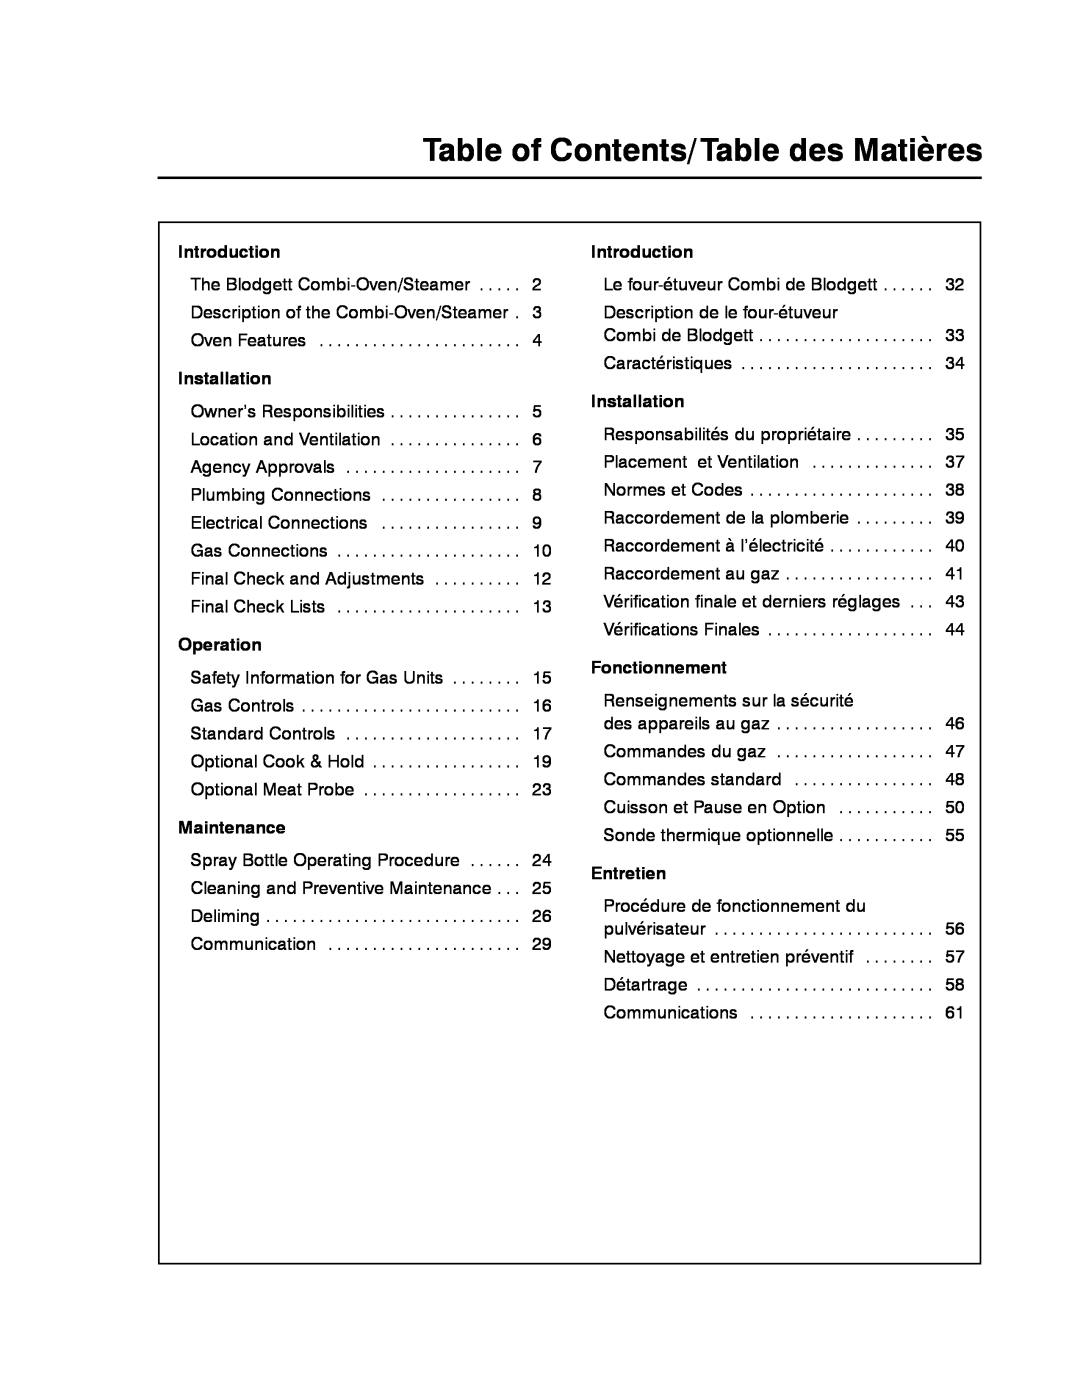 Blodgett BC-20G Table of Contents/Table des Matières, Introduction, Installation, Operation, Maintenance, Fonctionnement 